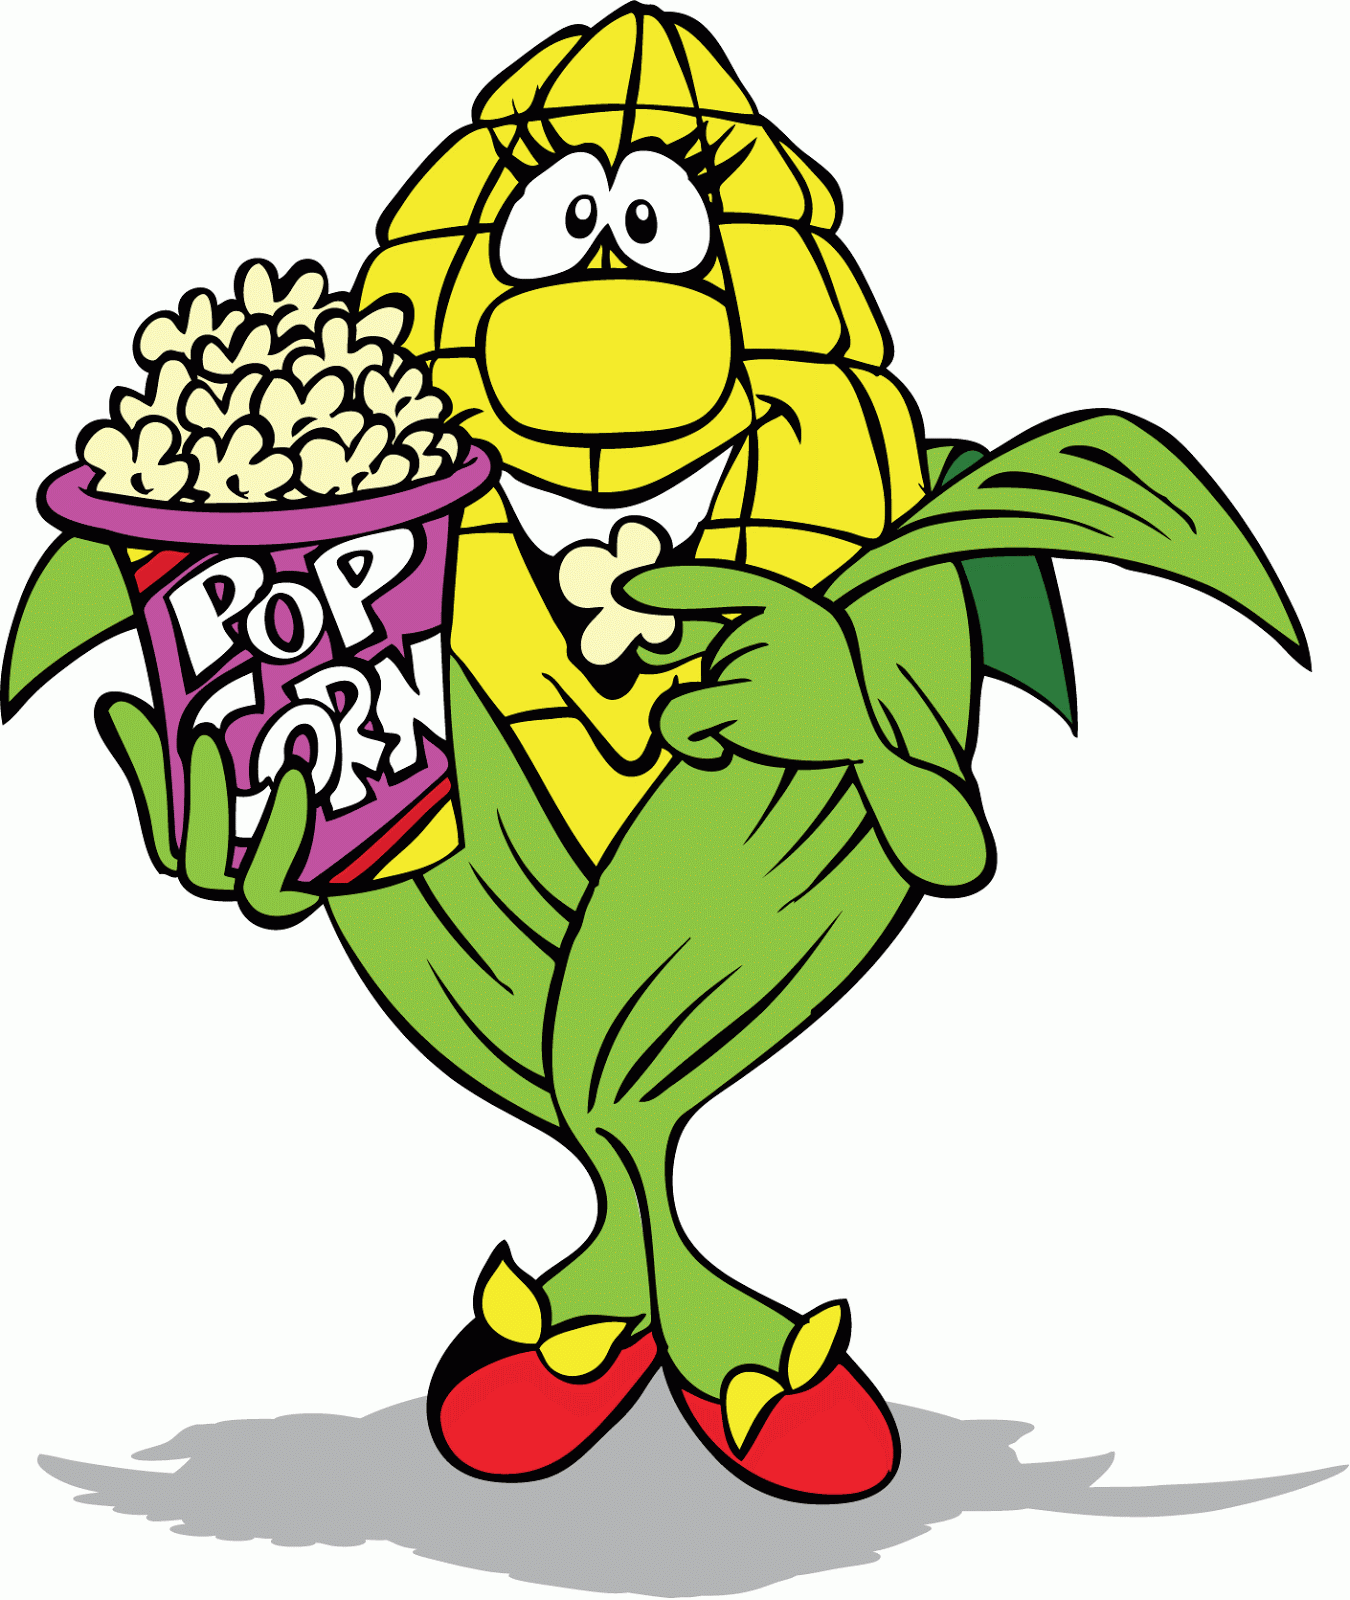 Free Cartoon Popcorn Images, Download Free Cartoon Popcorn Images png